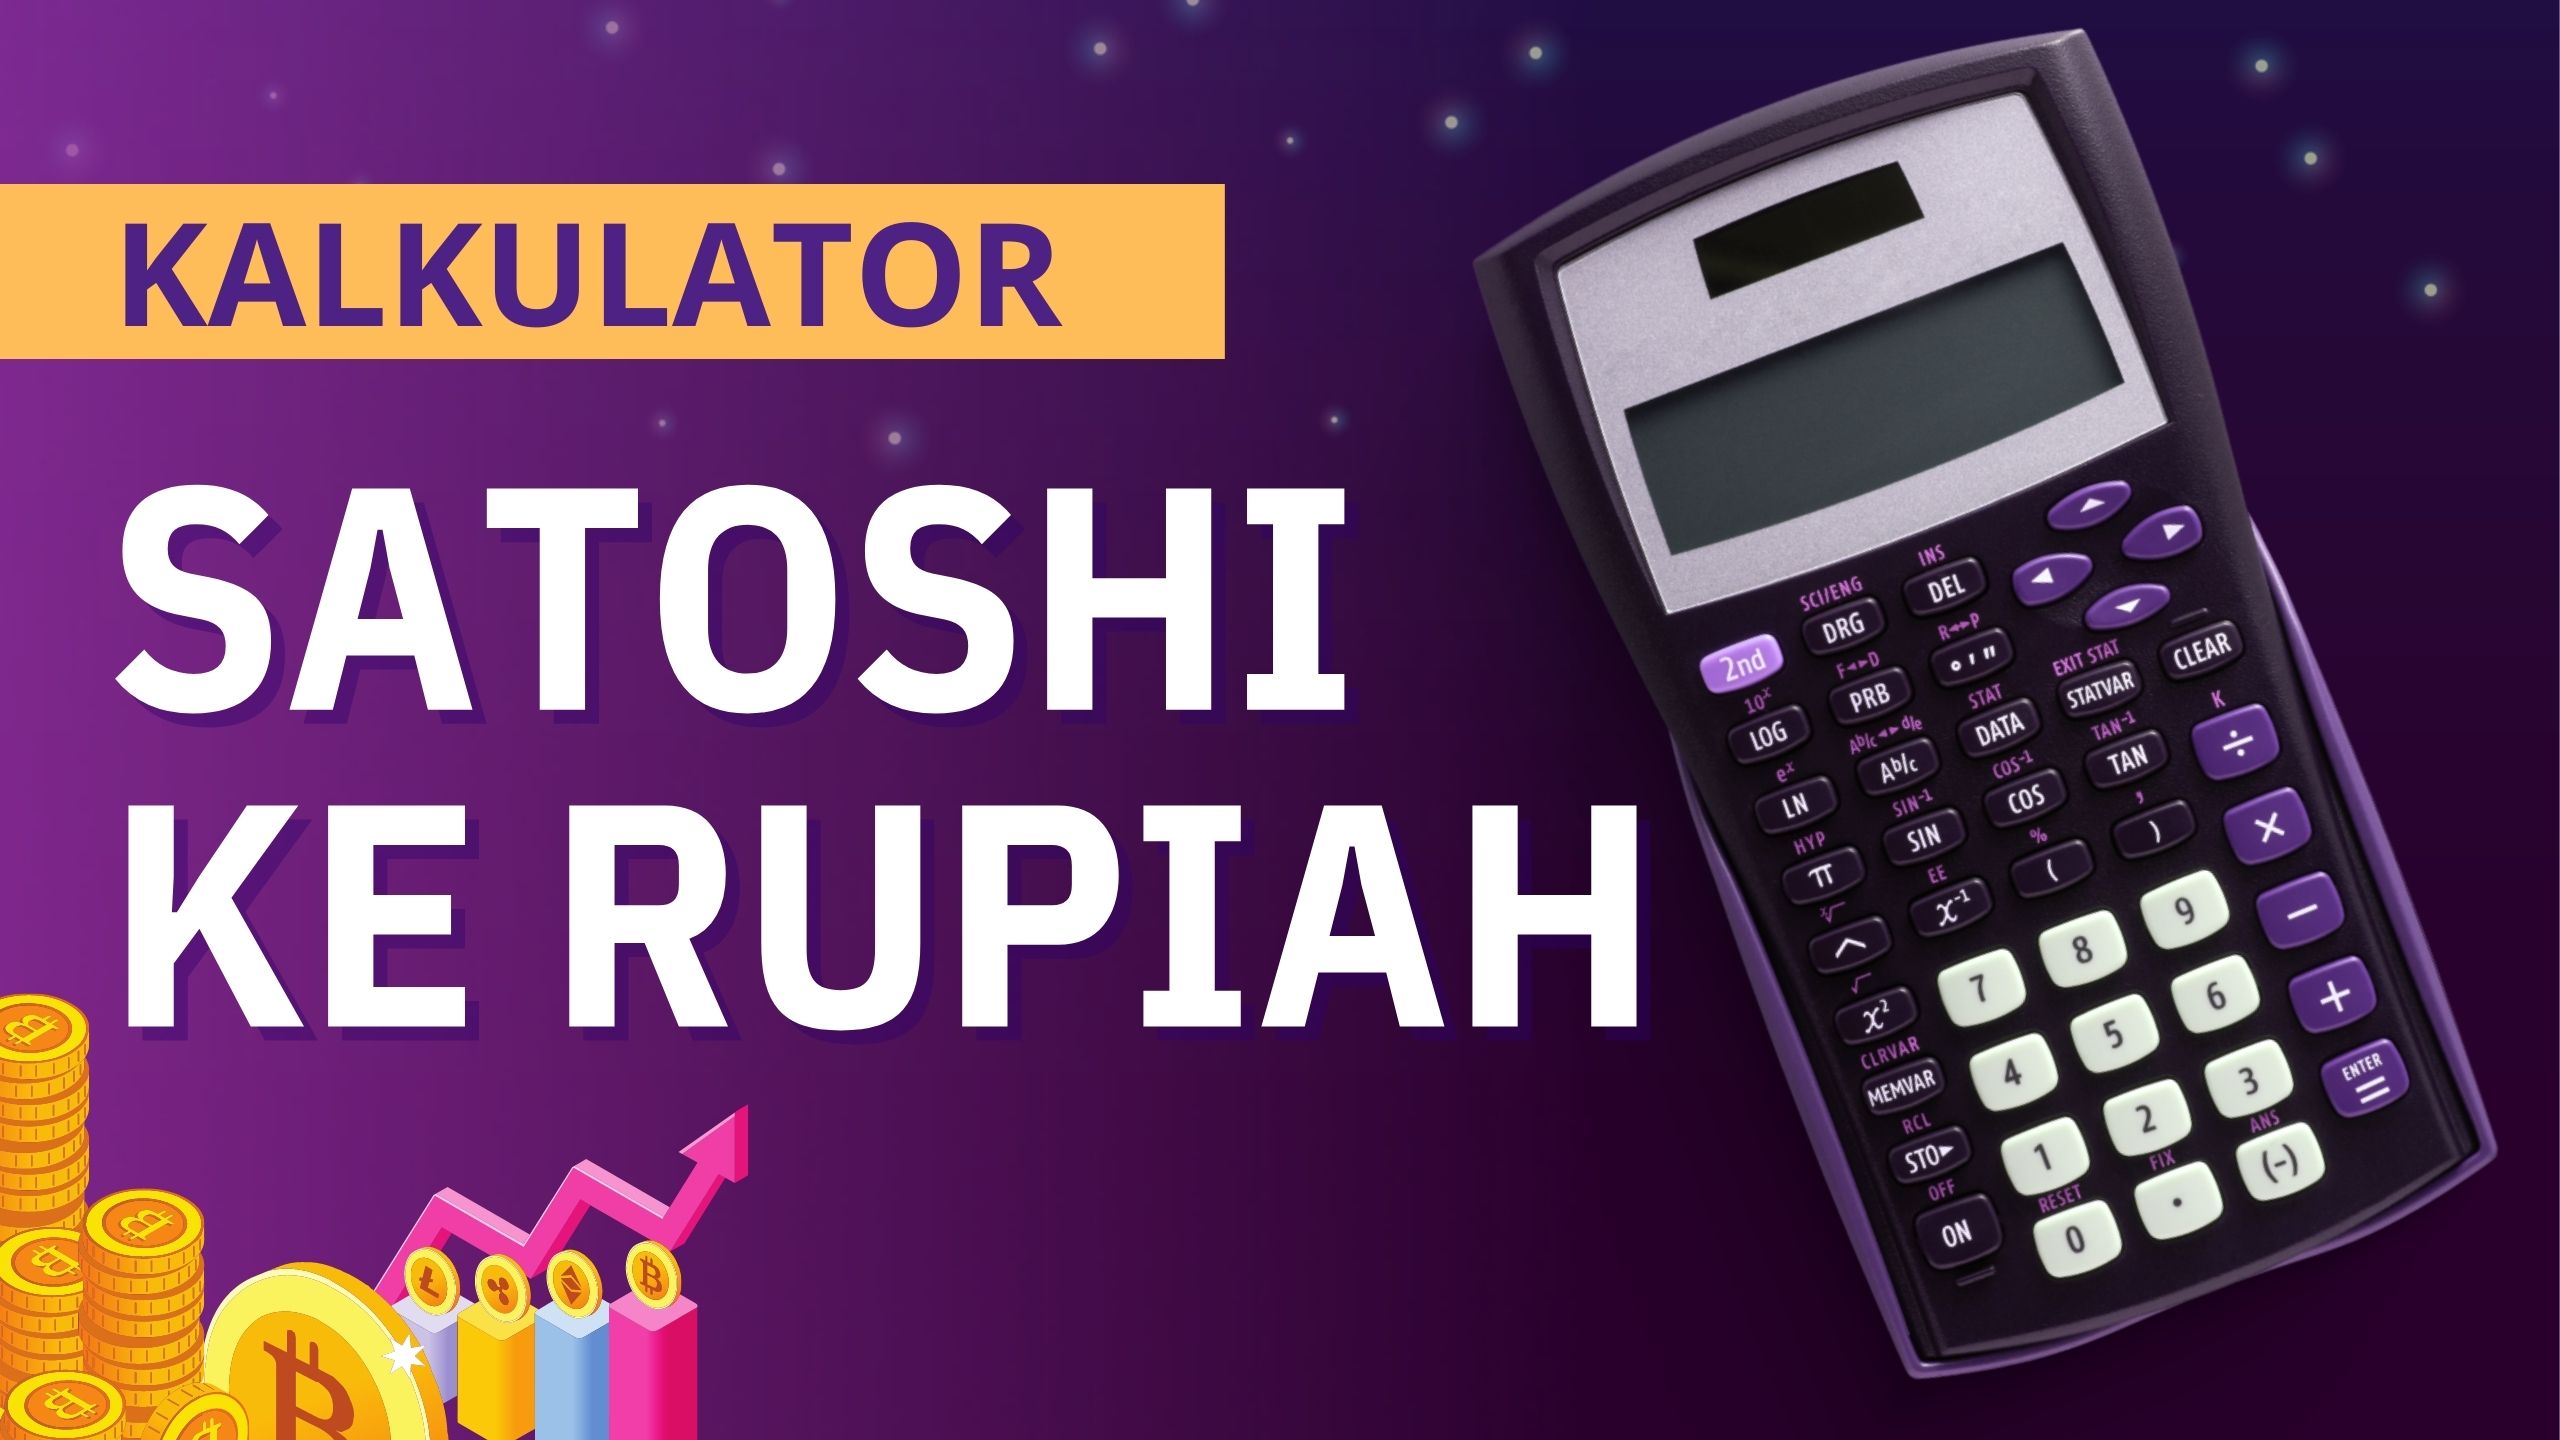 Kalkulator Satoshi Ke Rupiah